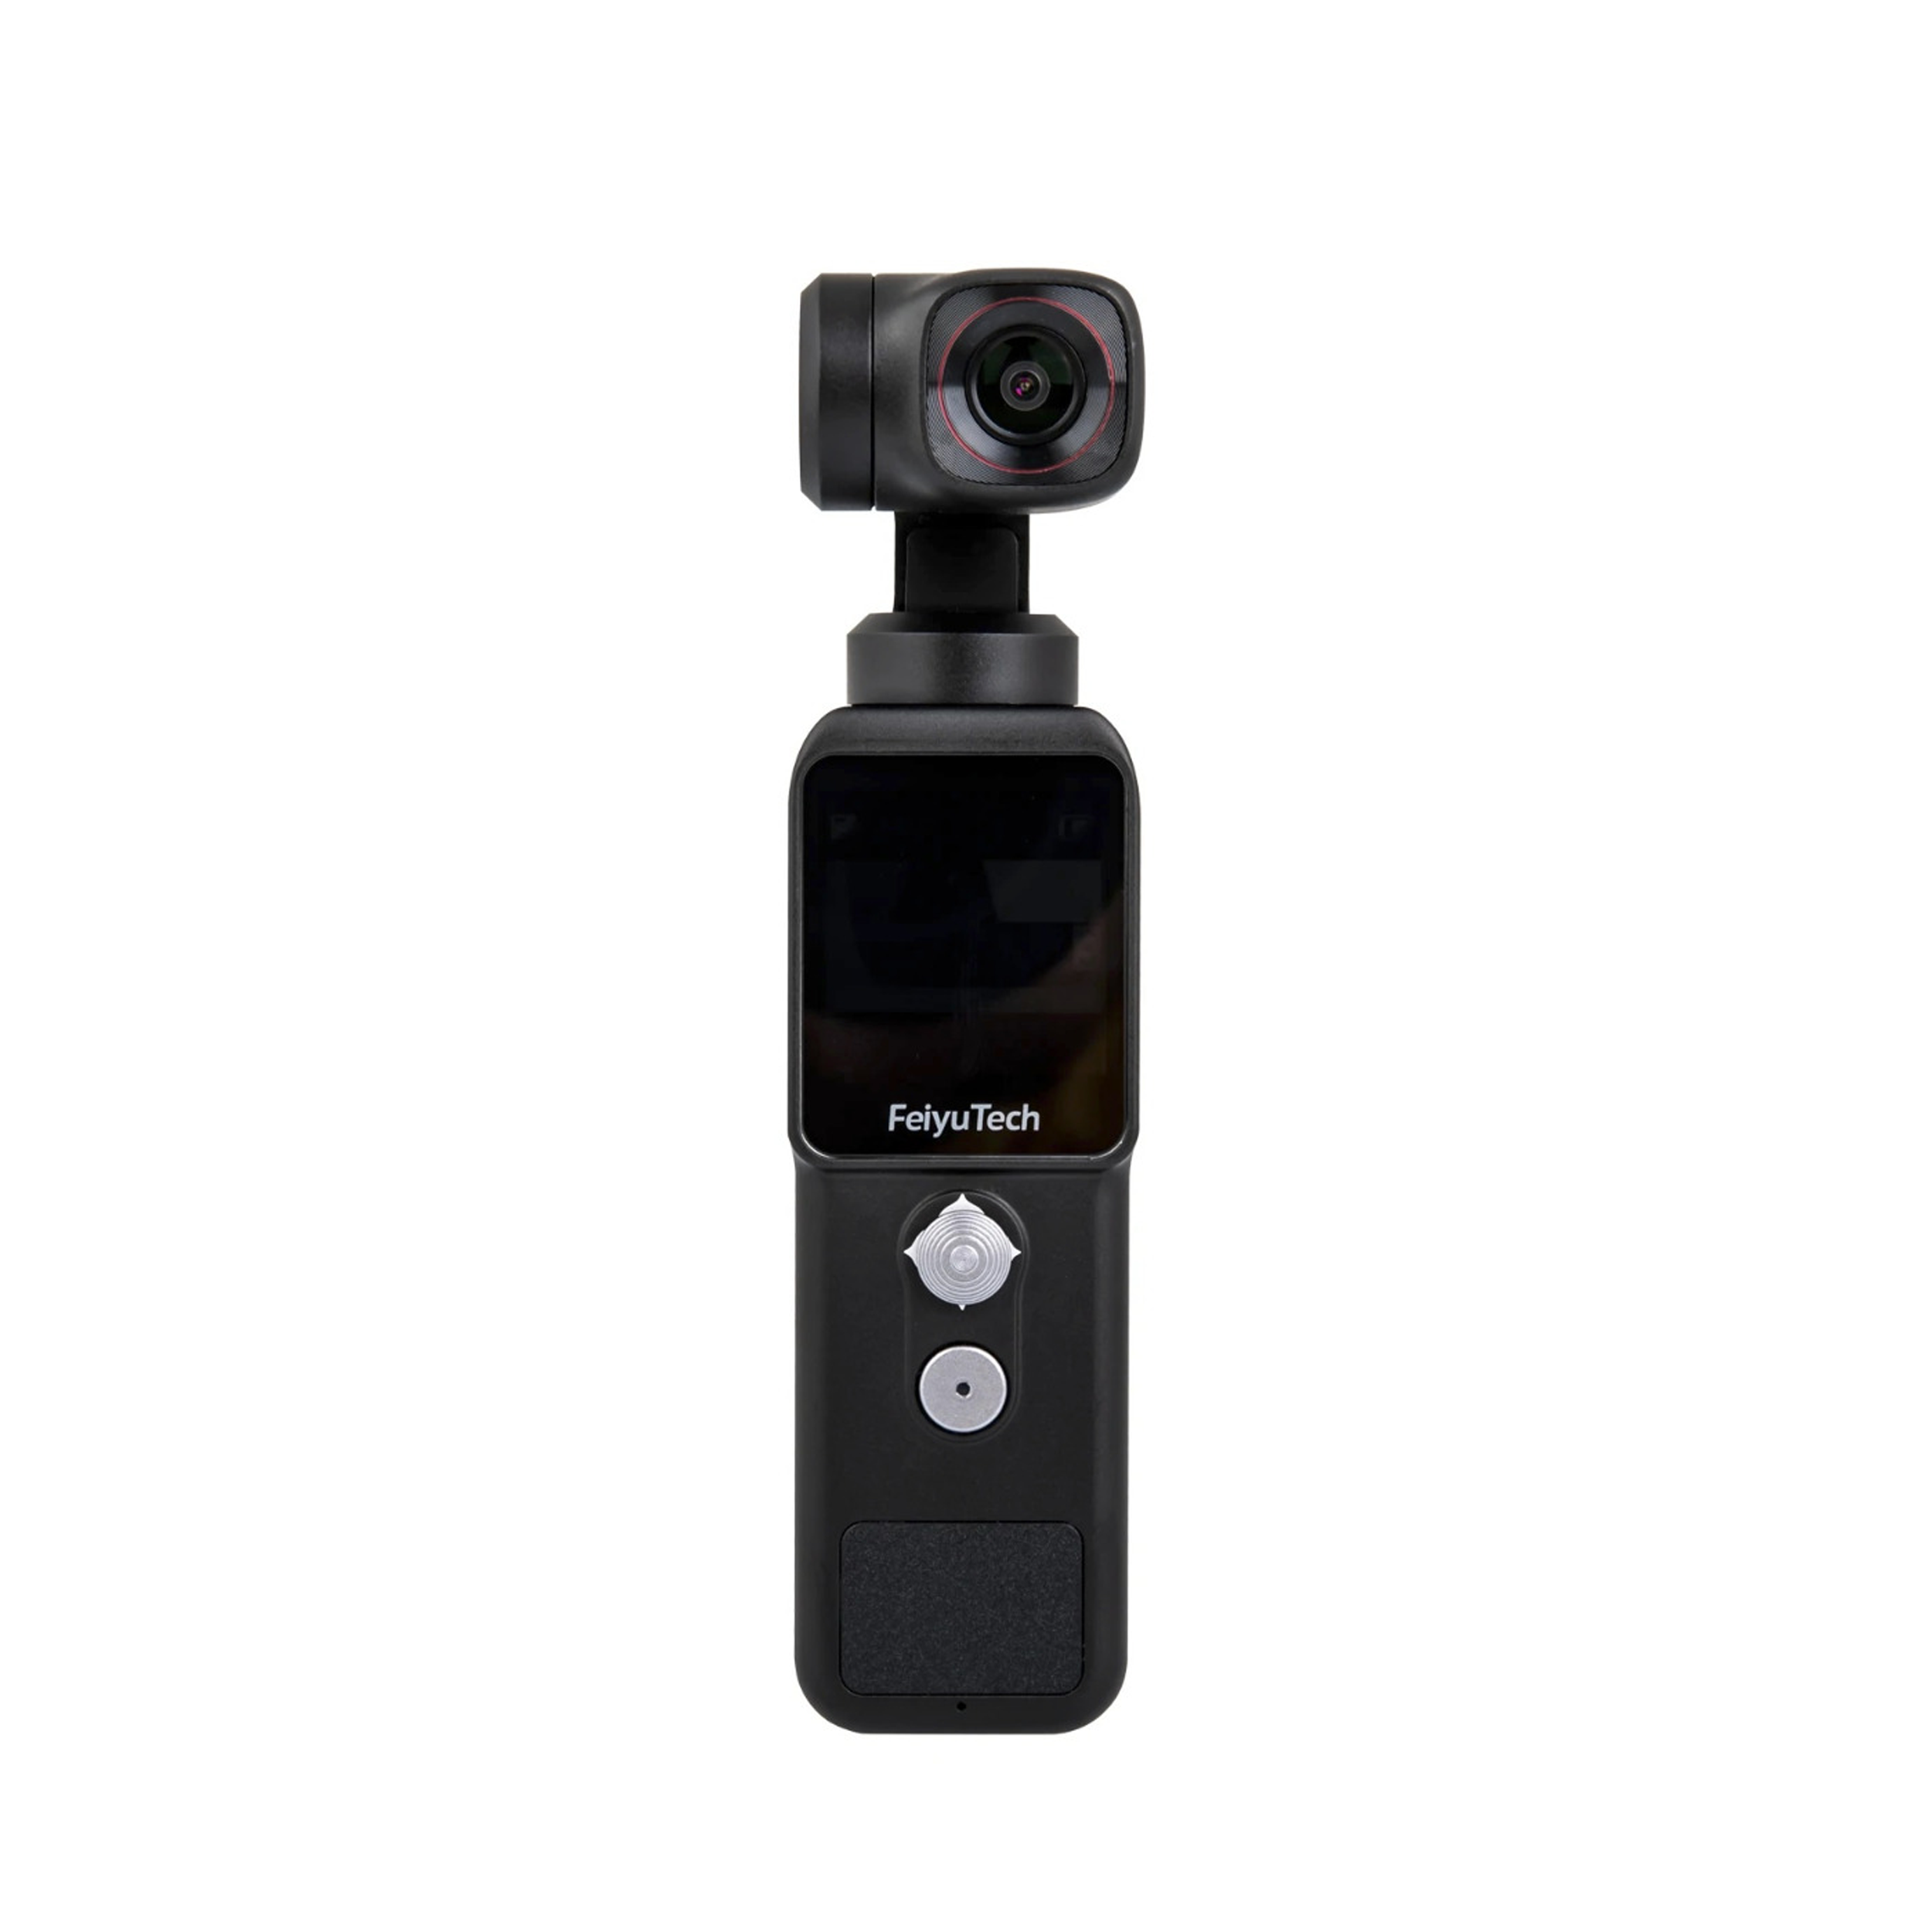 Feiyu Tech Pocket 2 Action Camera Gimbal